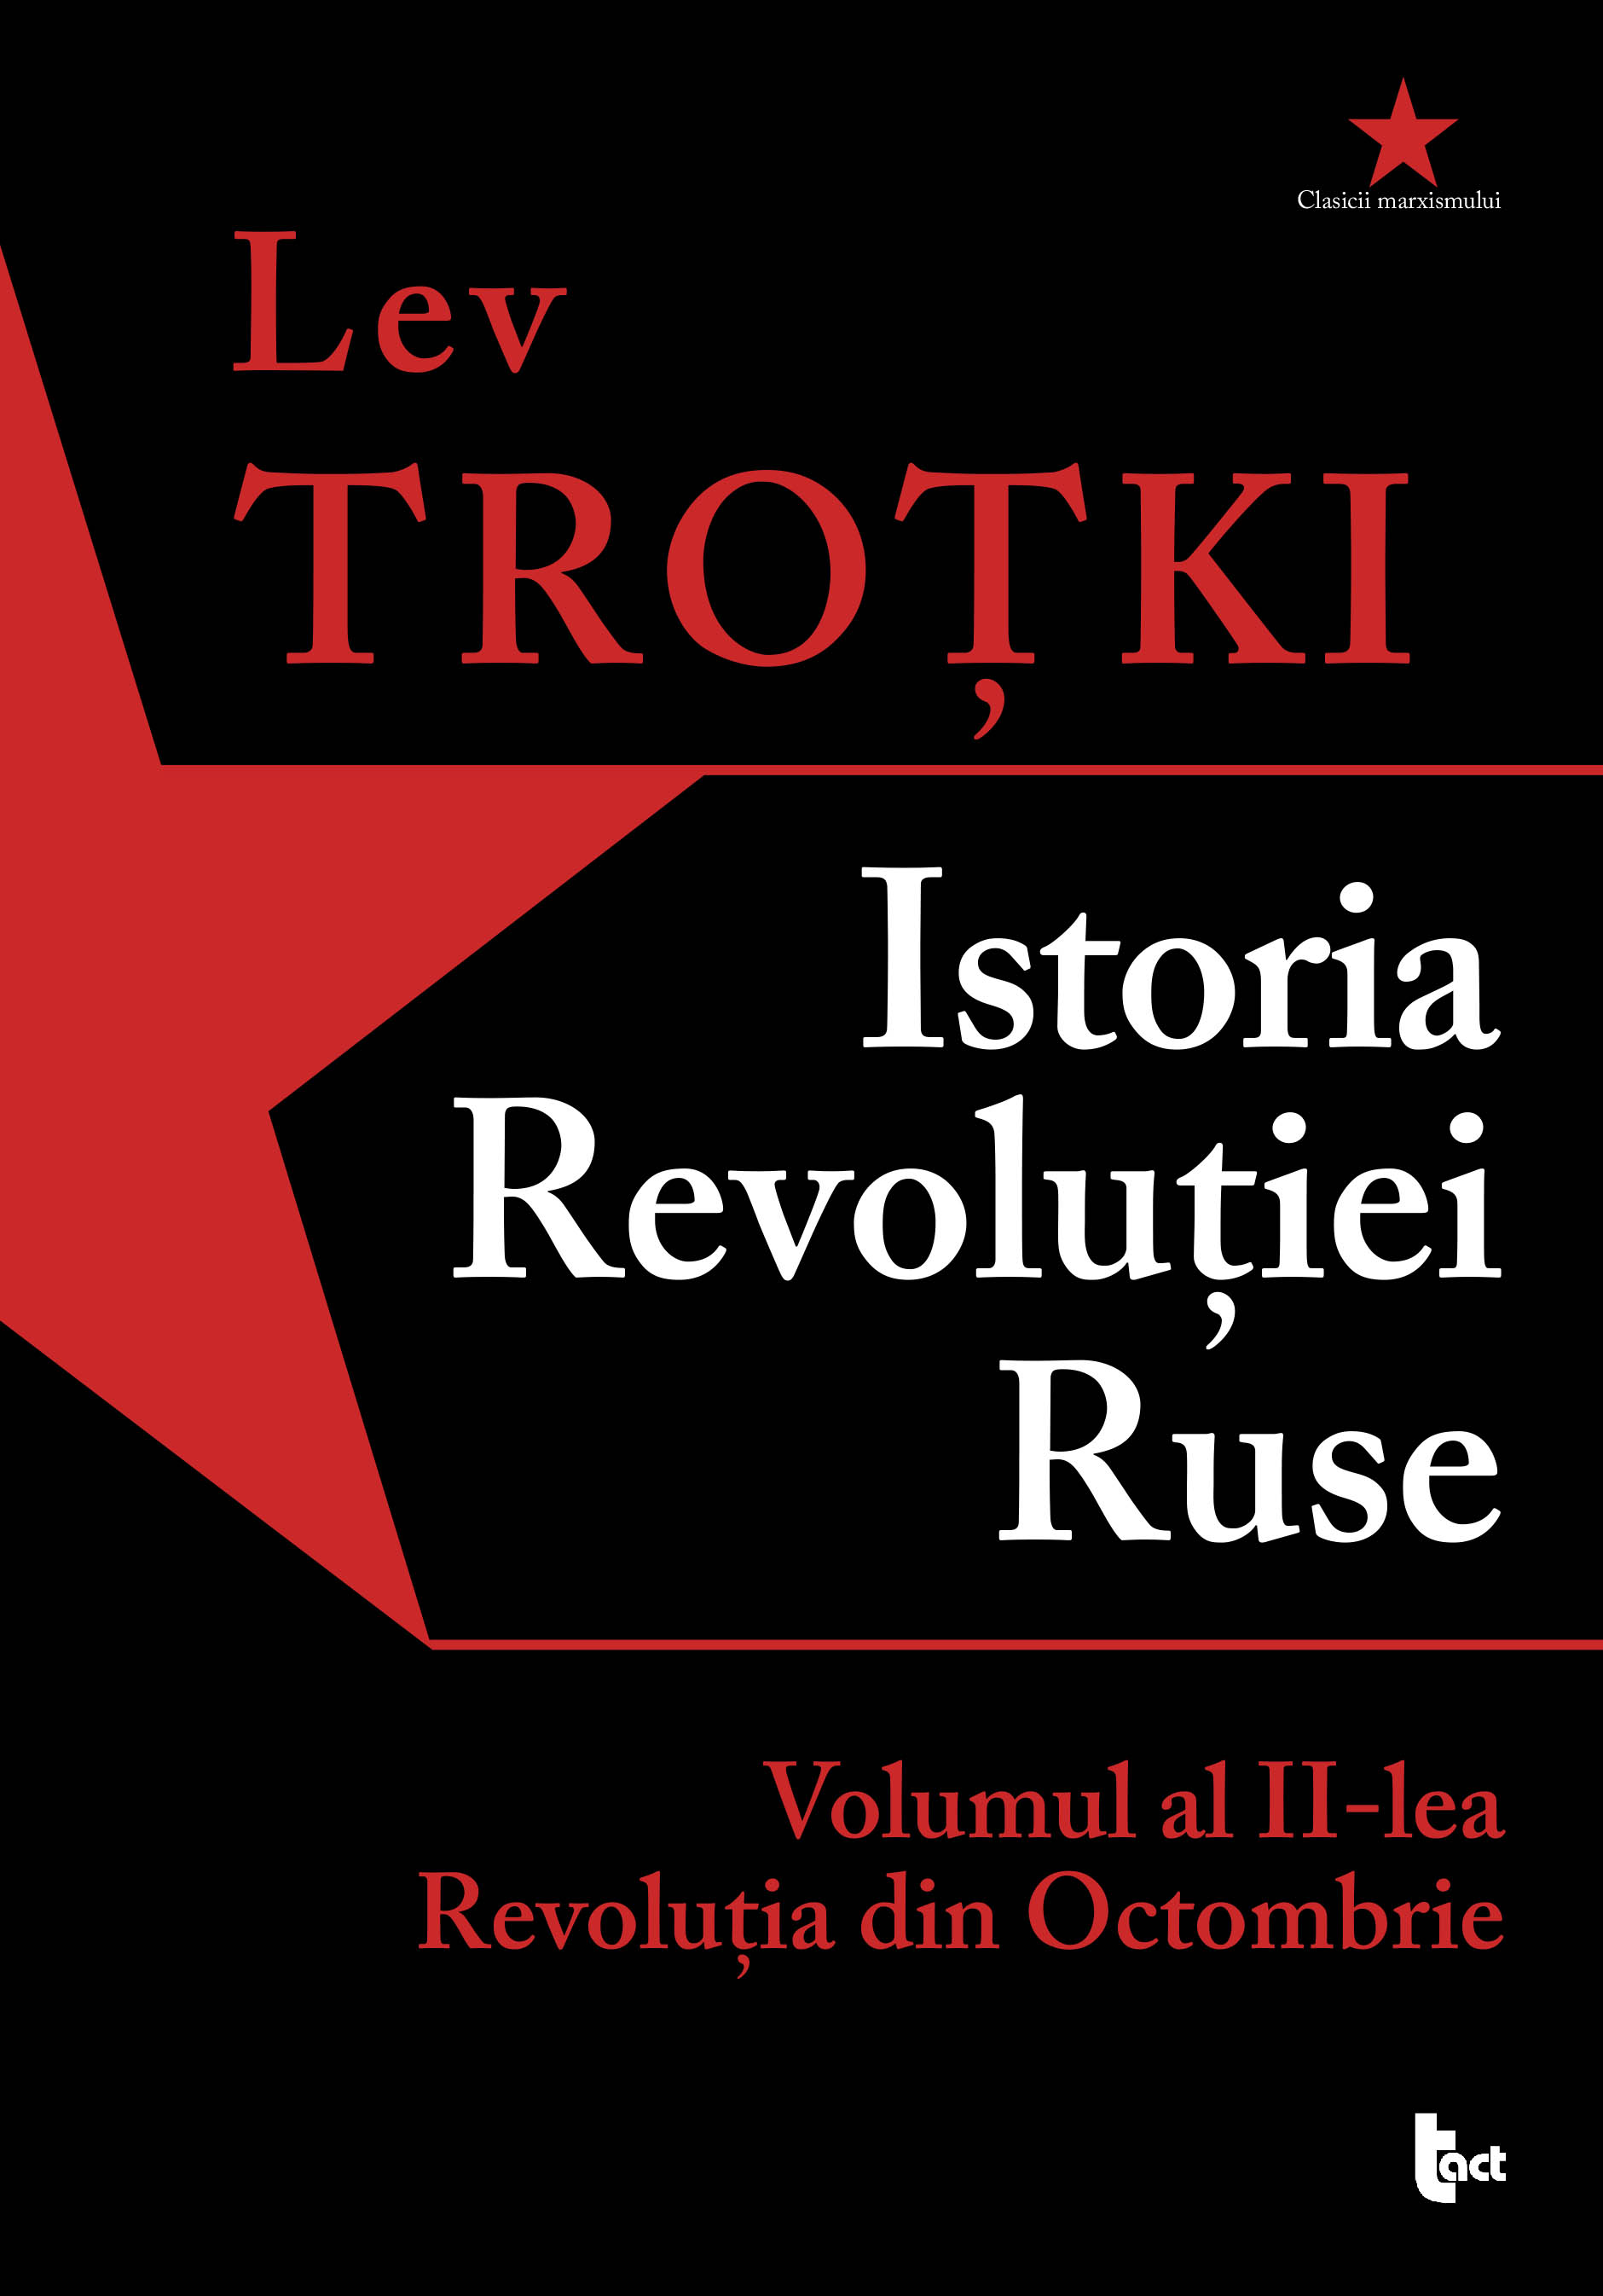 Istoria Revolutiei Ruse. Volumul al II-lea | Lev Trotki carturesti.ro poza bestsellers.ro